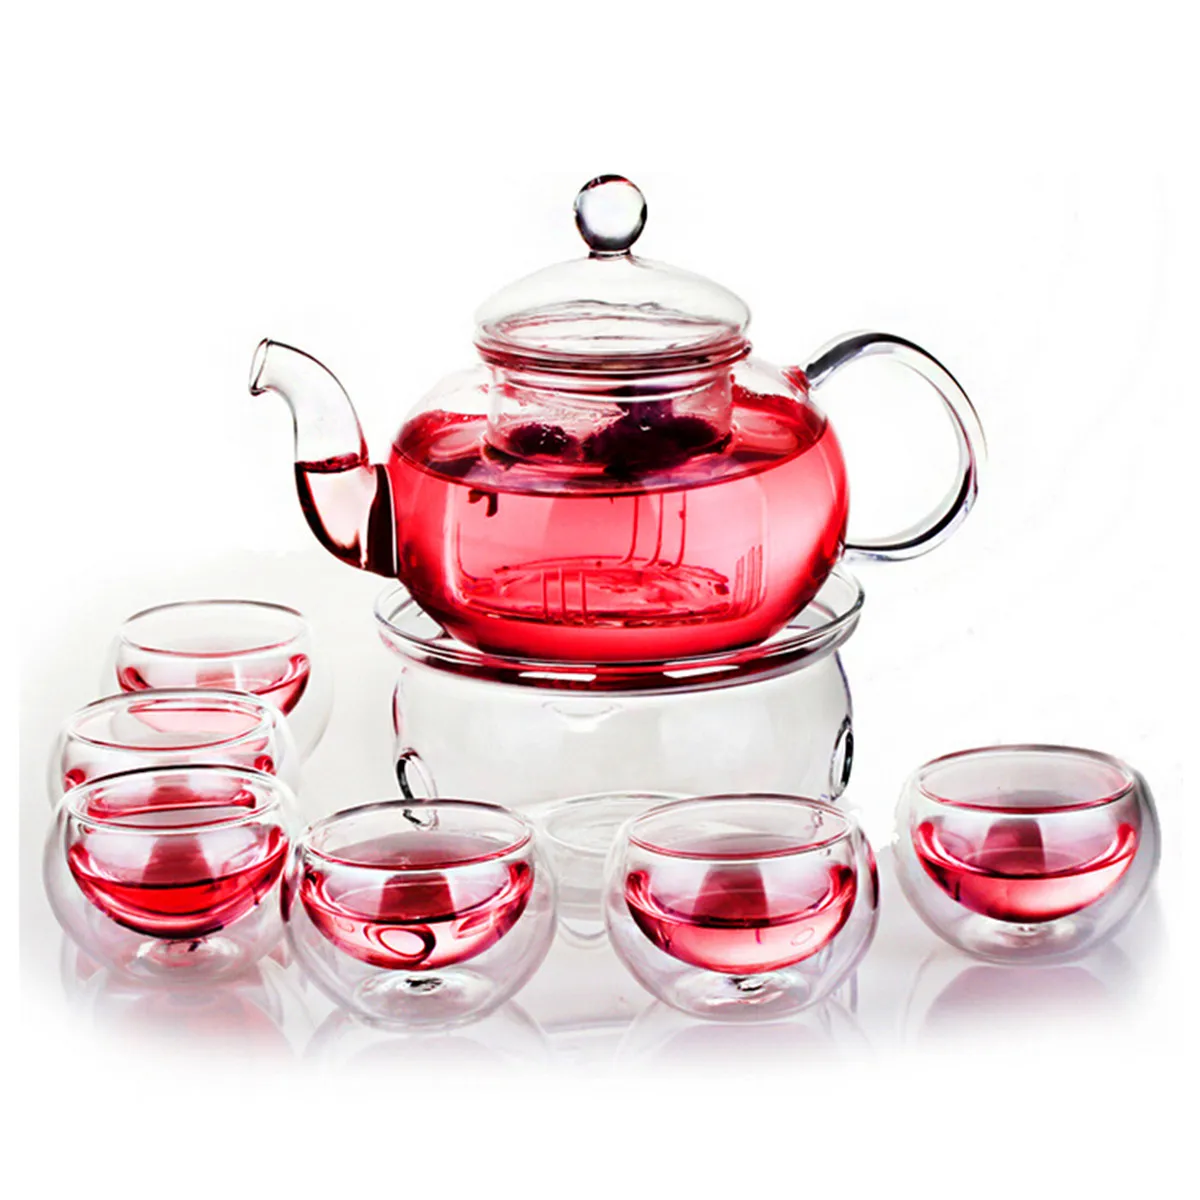 600ml Teapot Set Heat-resistant Glass Teapot with Round Candle Holder Teacup Flower Tea Kung Fu Tea Pot Teaware Gift